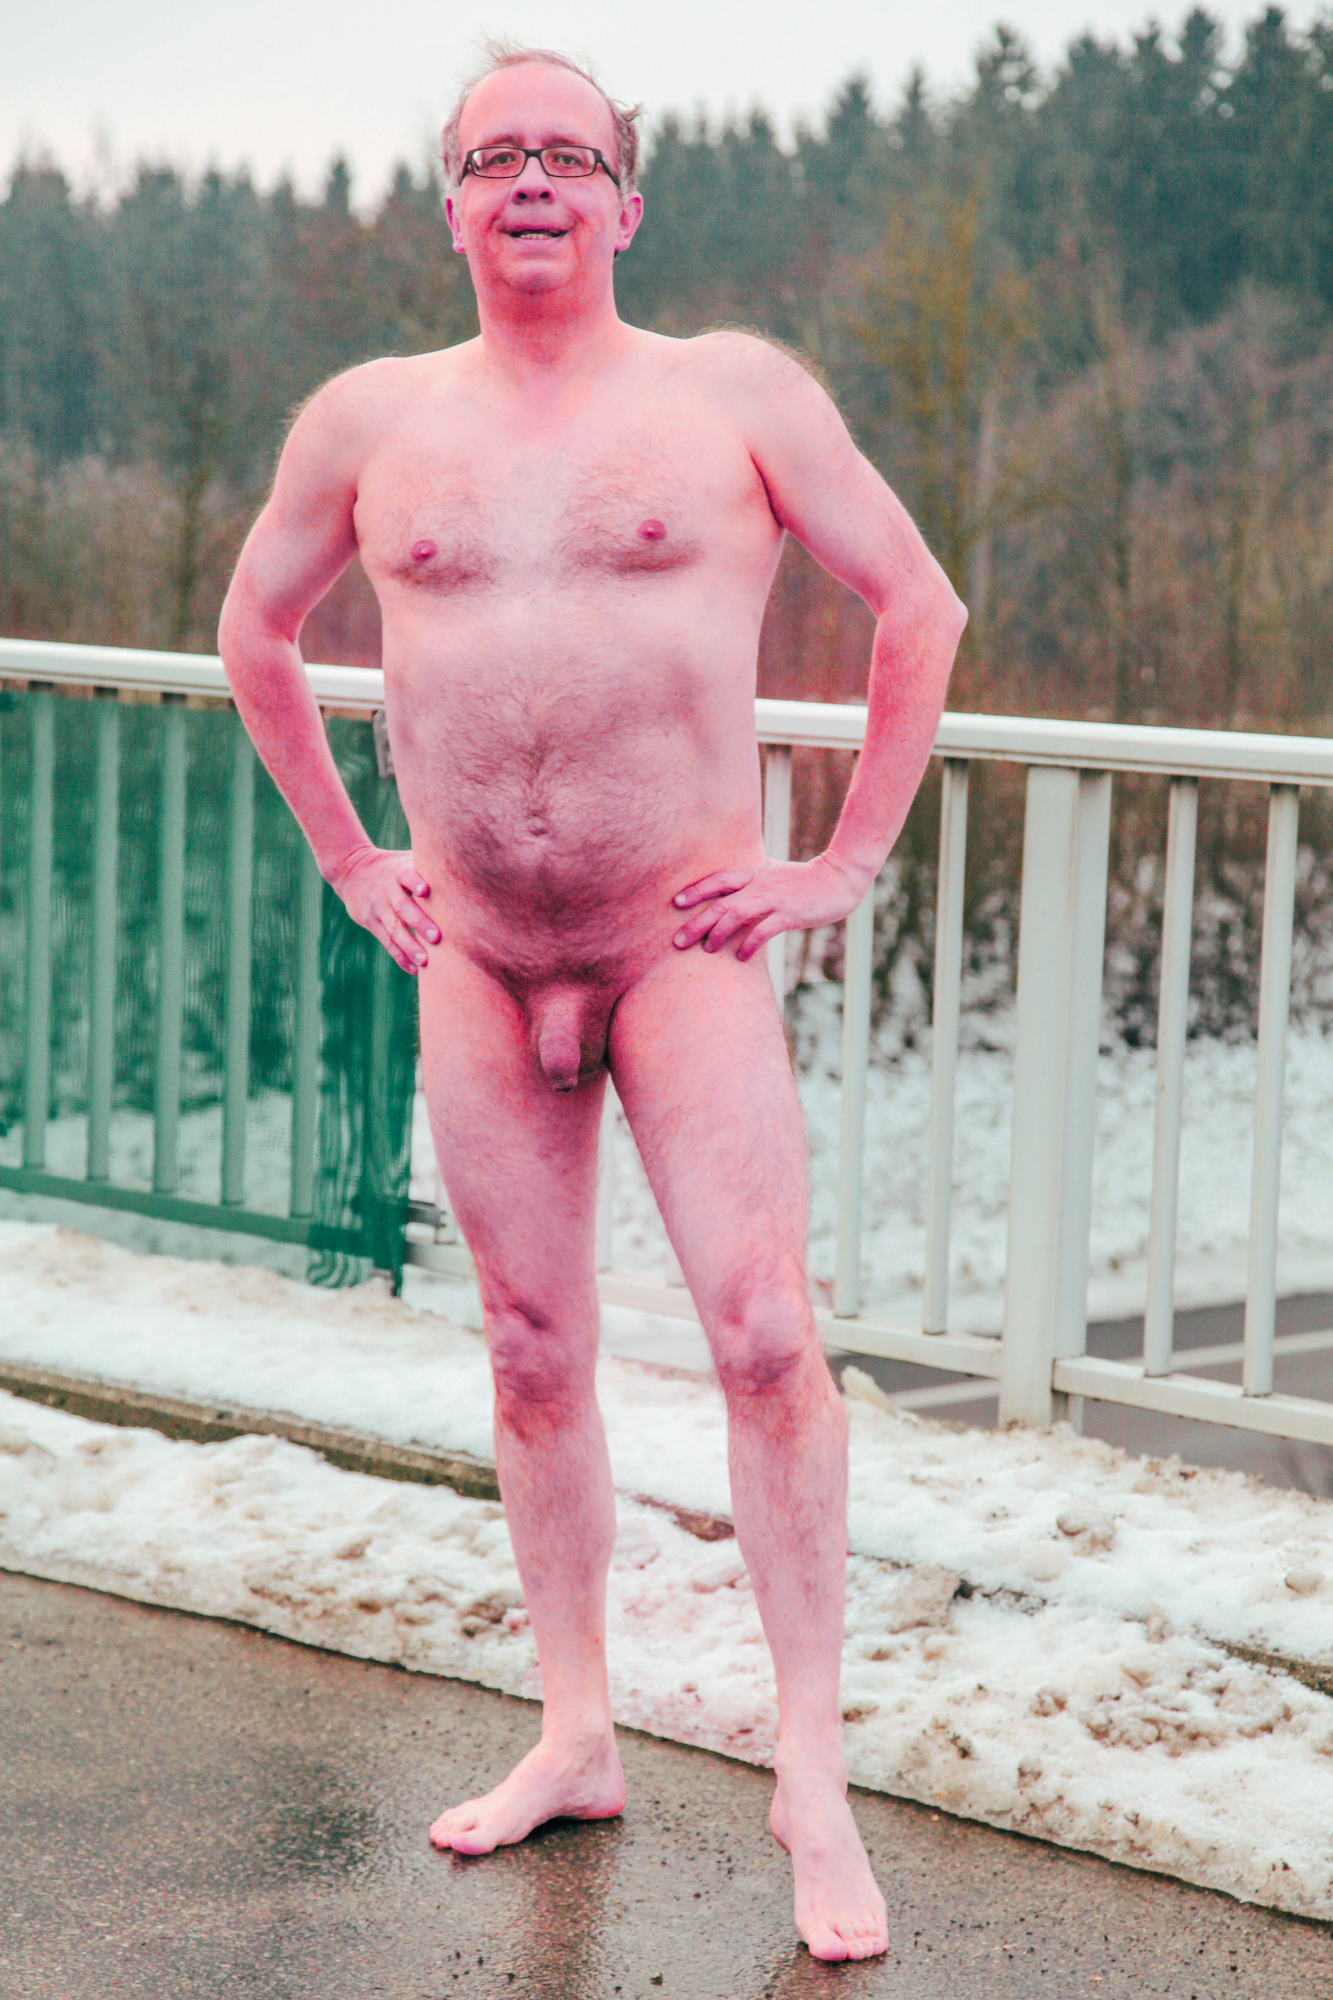 Male nude on bridge over highway close to Biberach, Germany